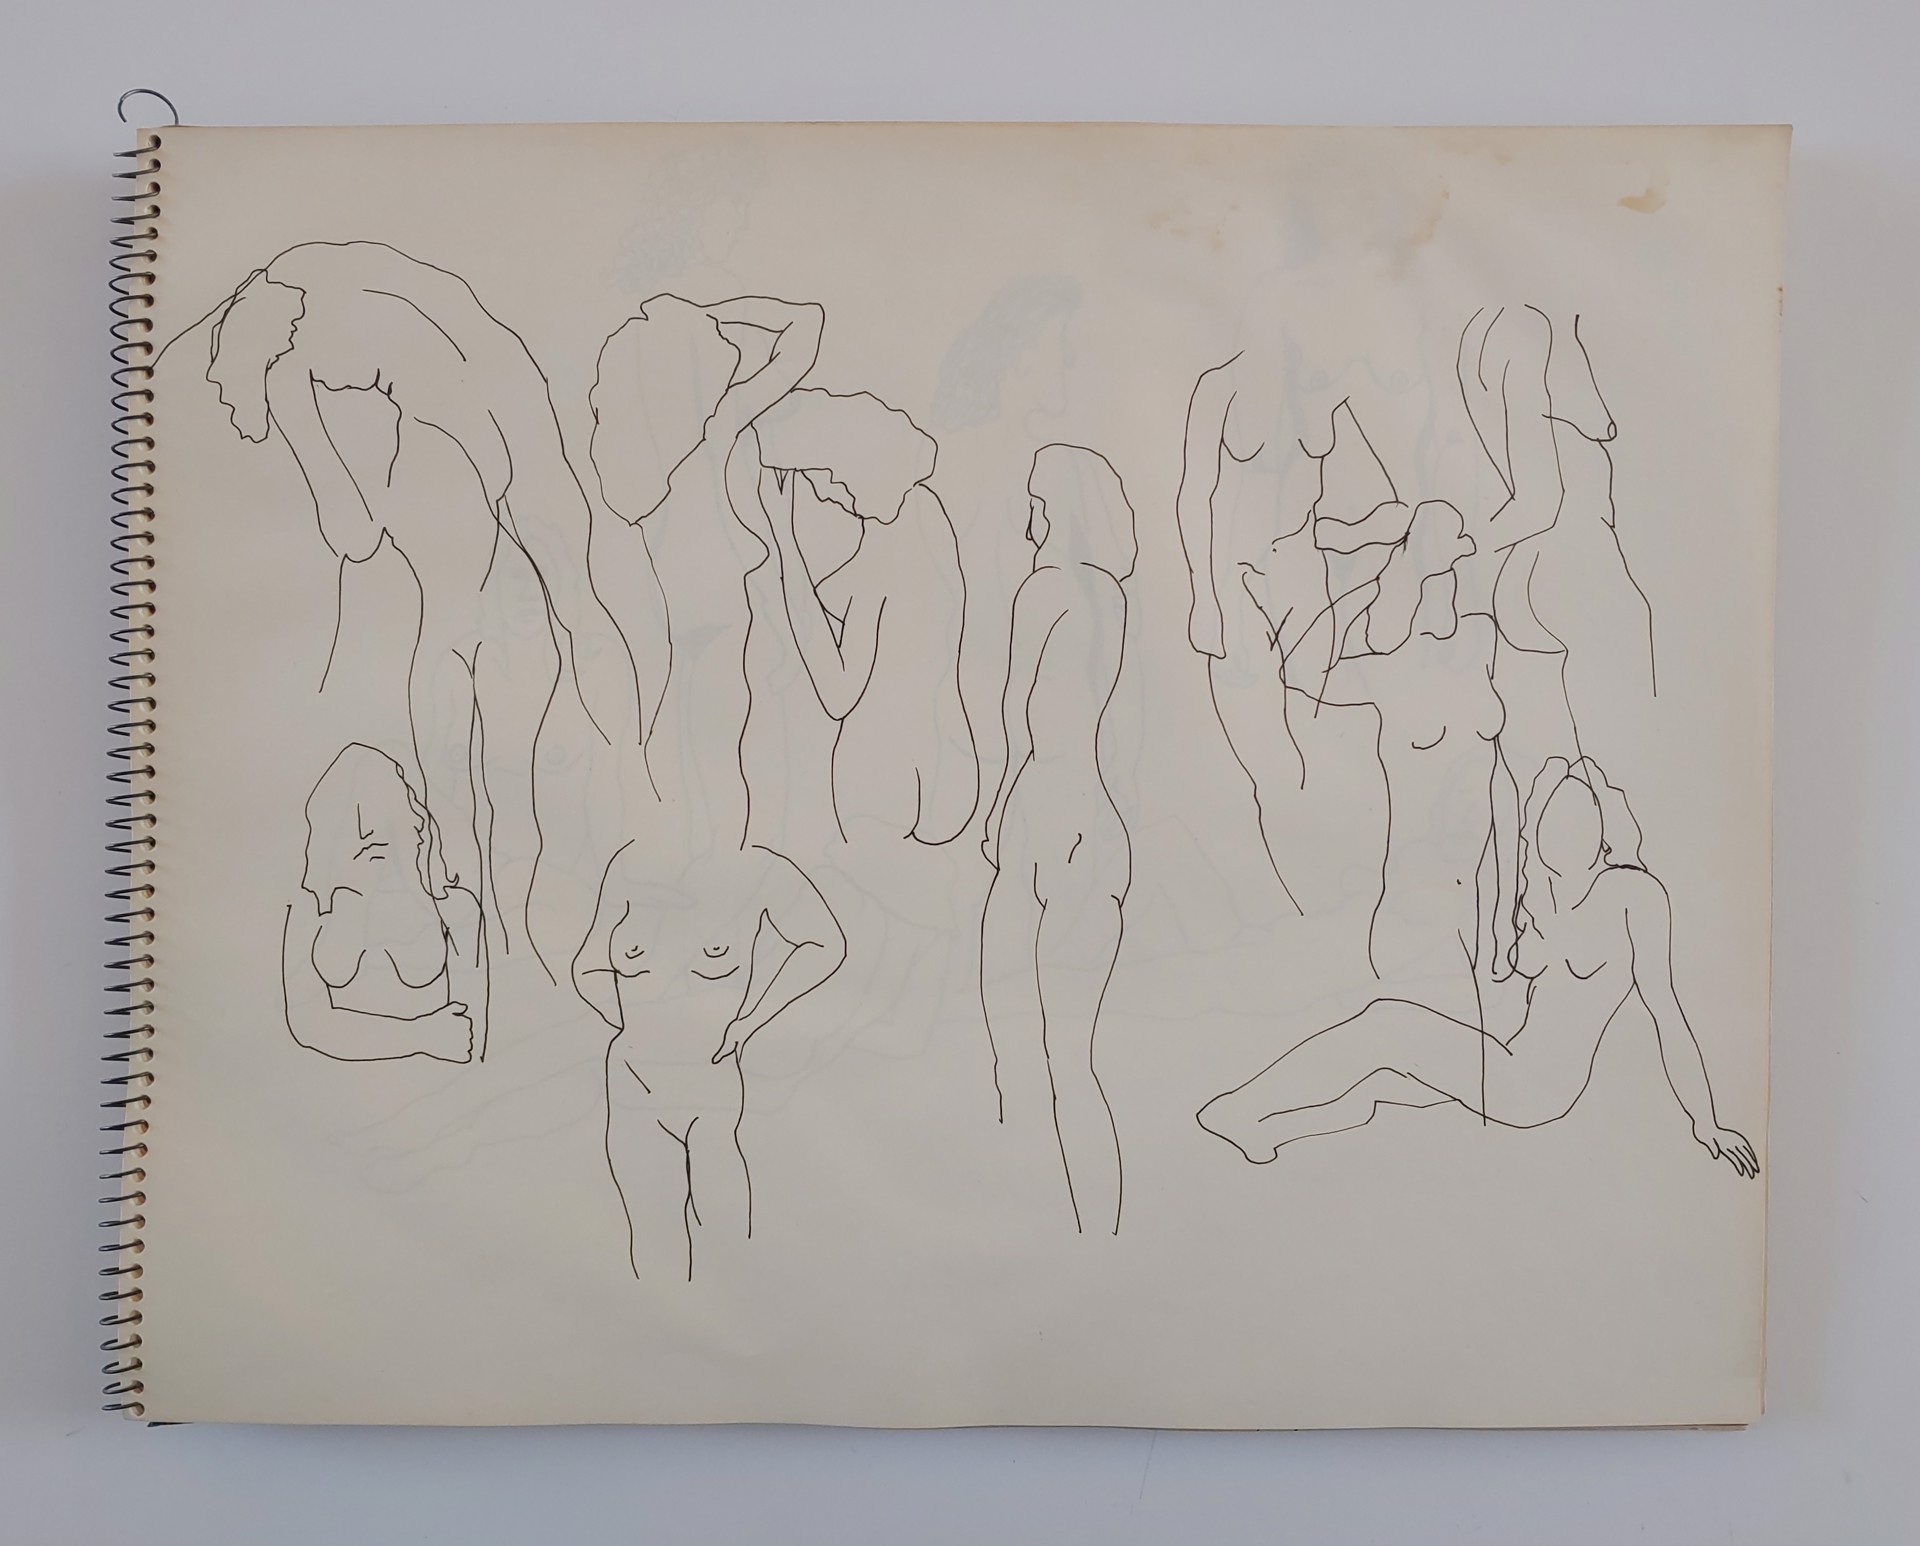 November 1982 Sketchbook by David Amdur